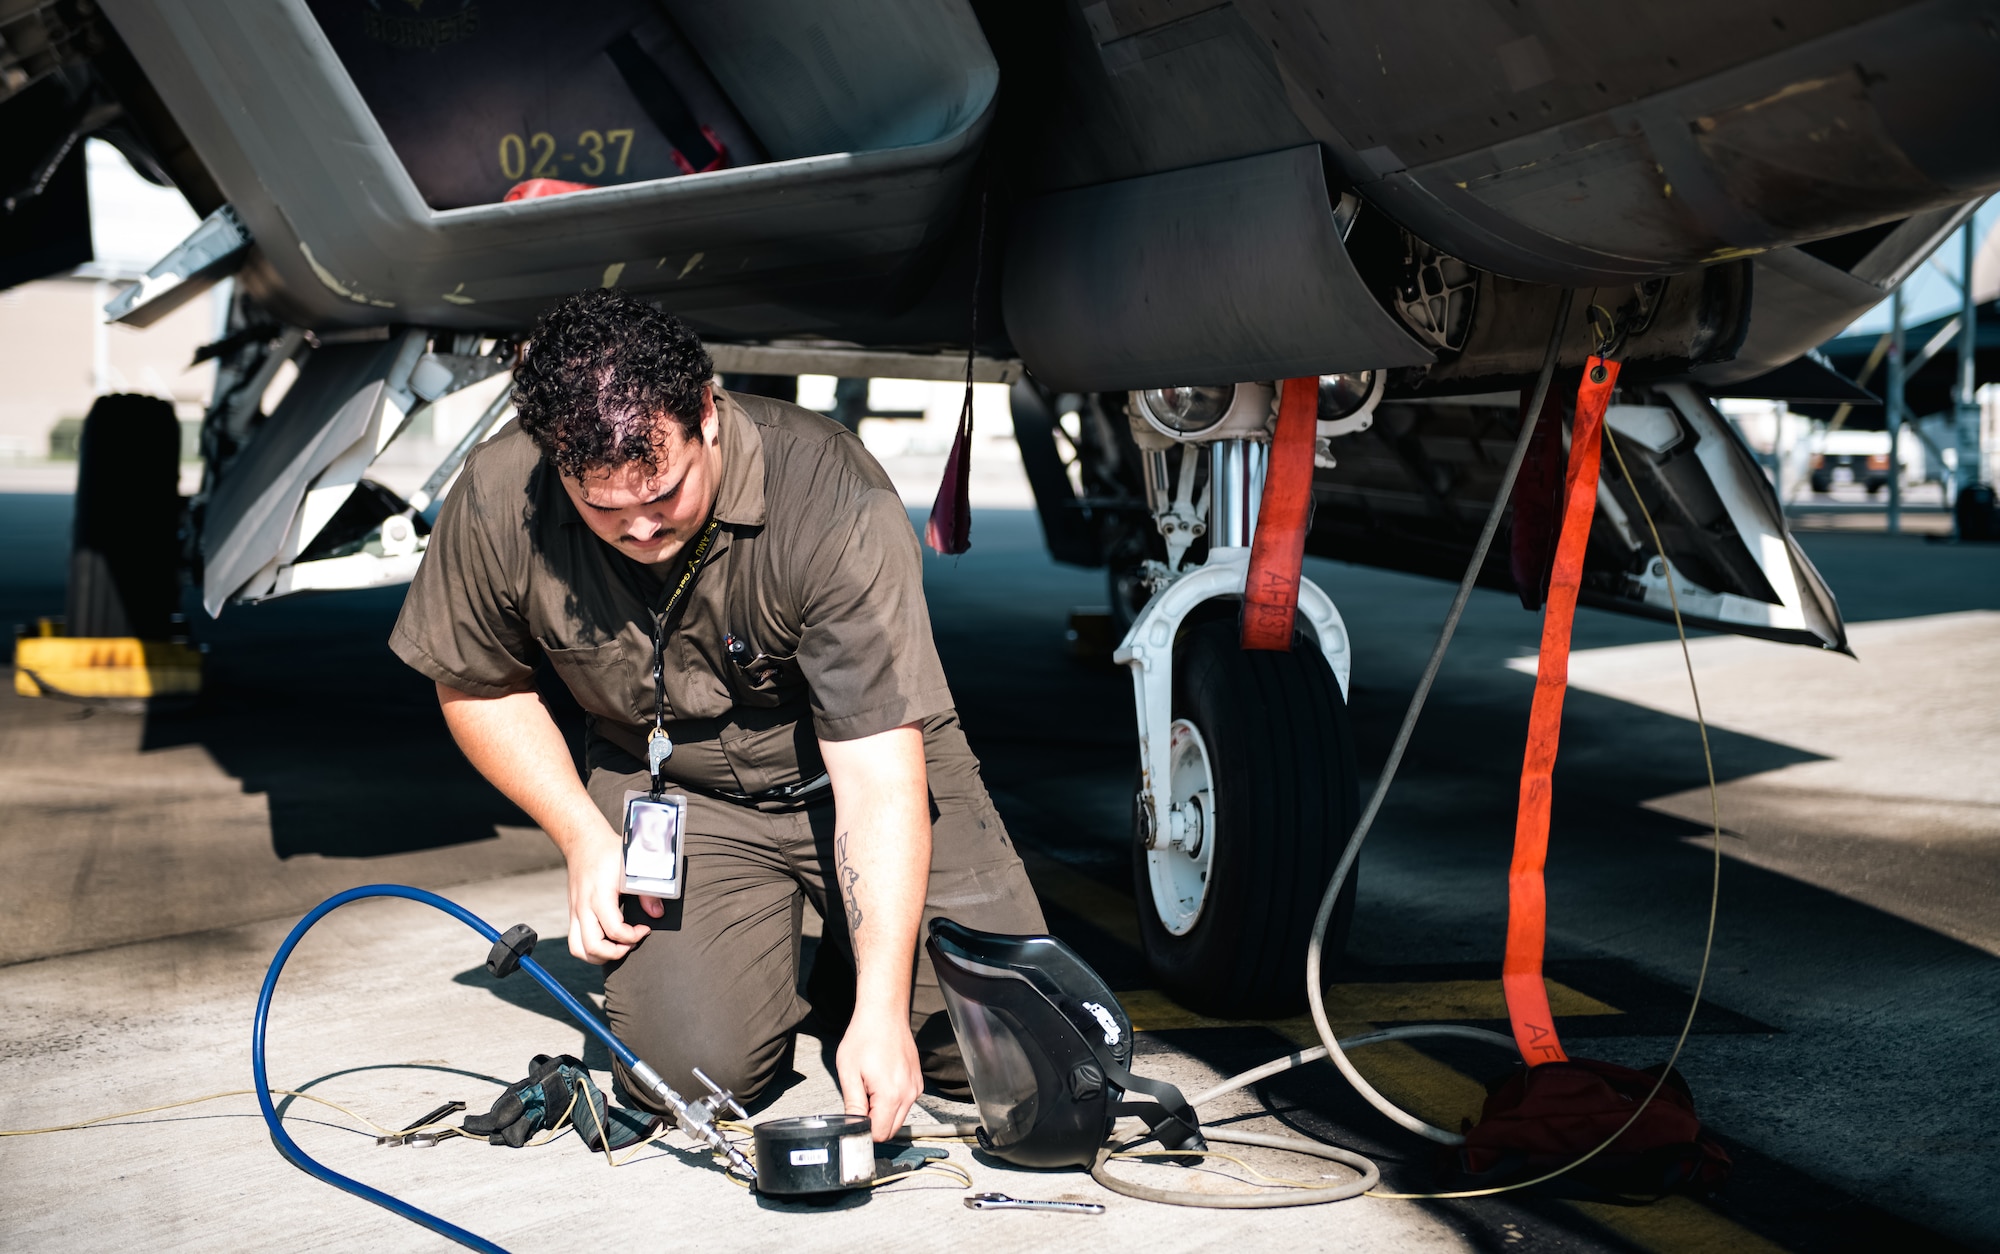 Airman performs aircraft maintenance.